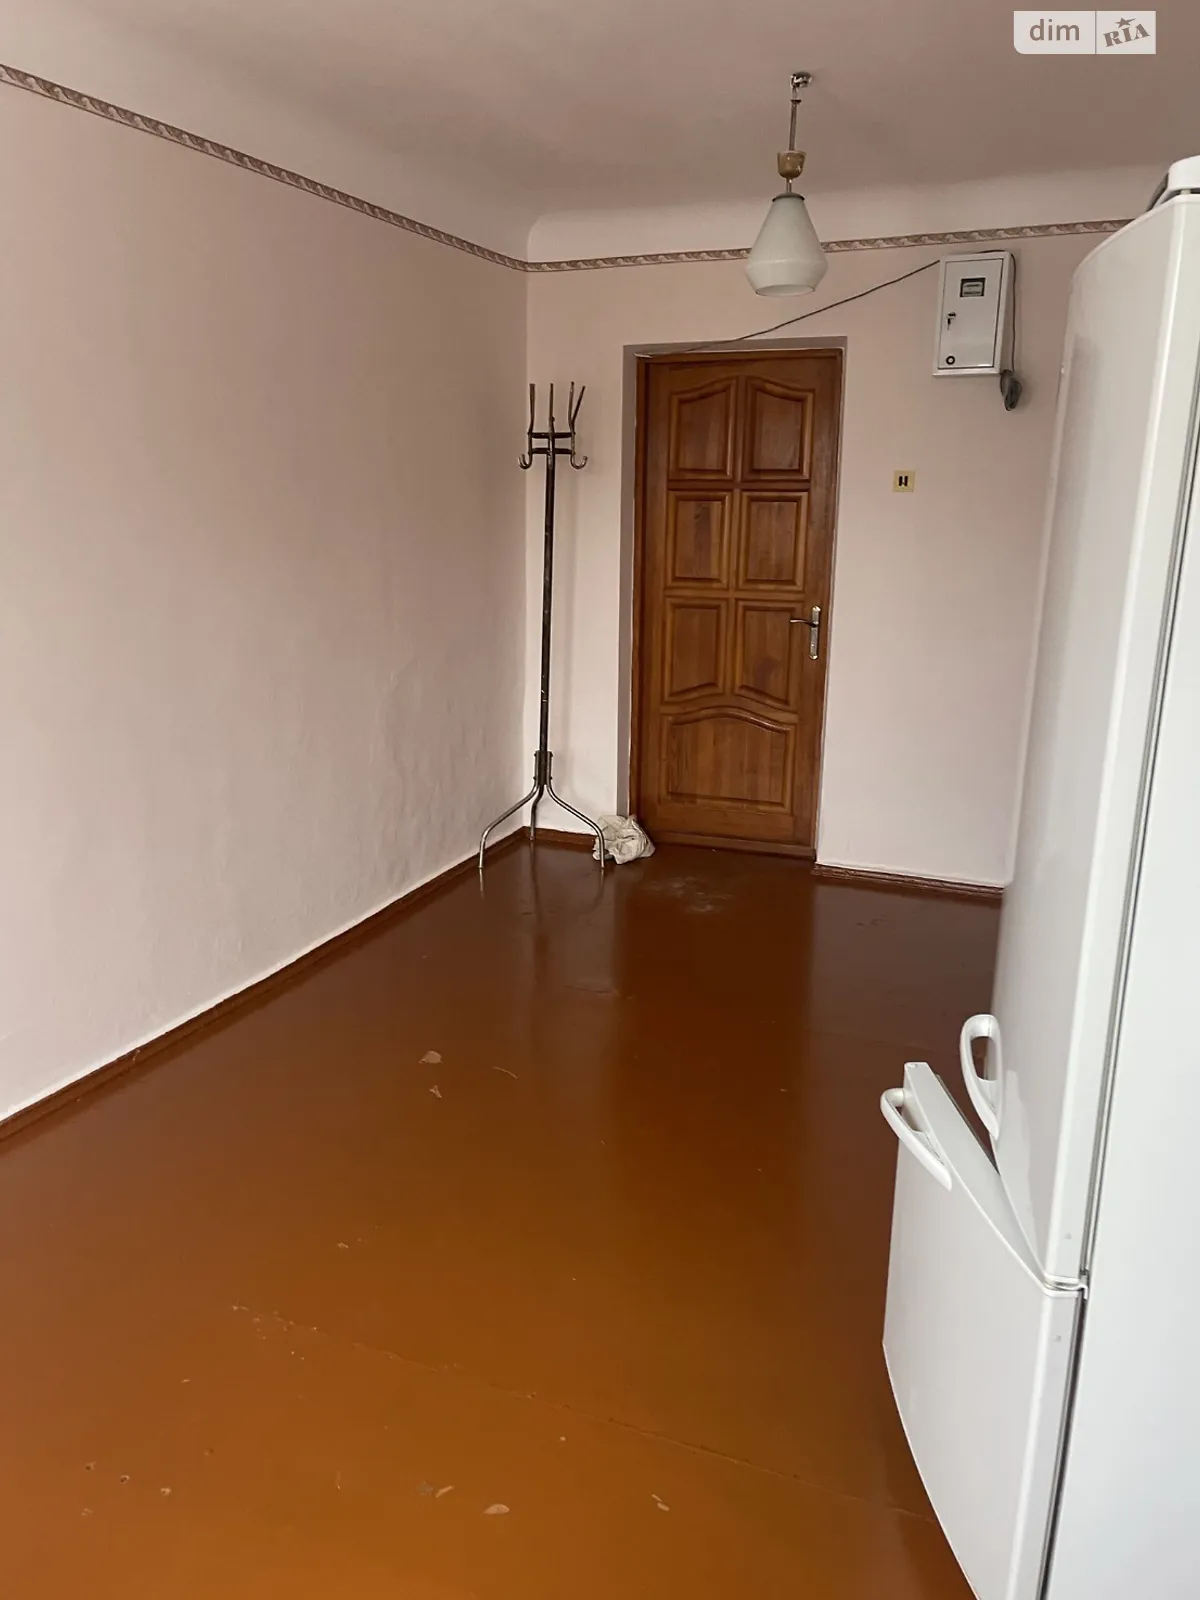 Продается комната 18 кв. м в Ровно, цена: 9900 $